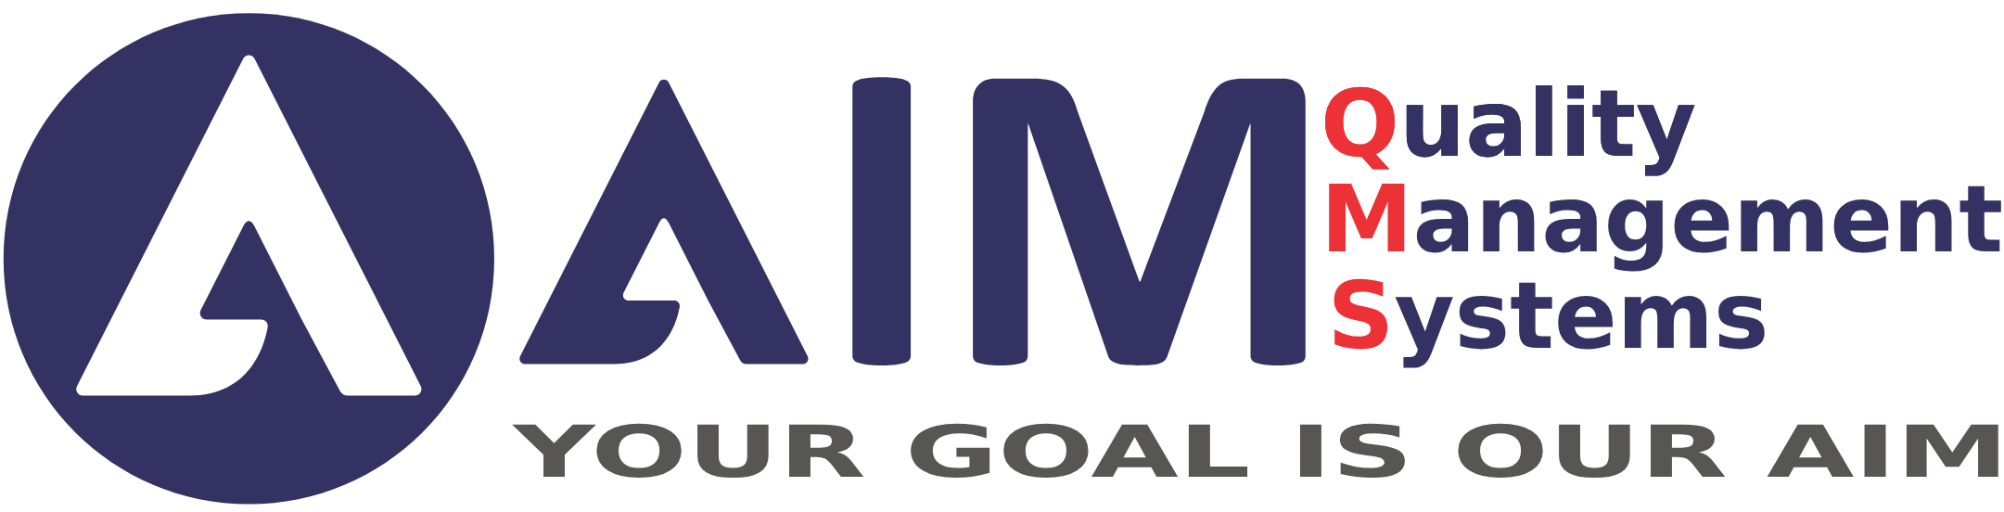 AIM Quality Management Systems Logo